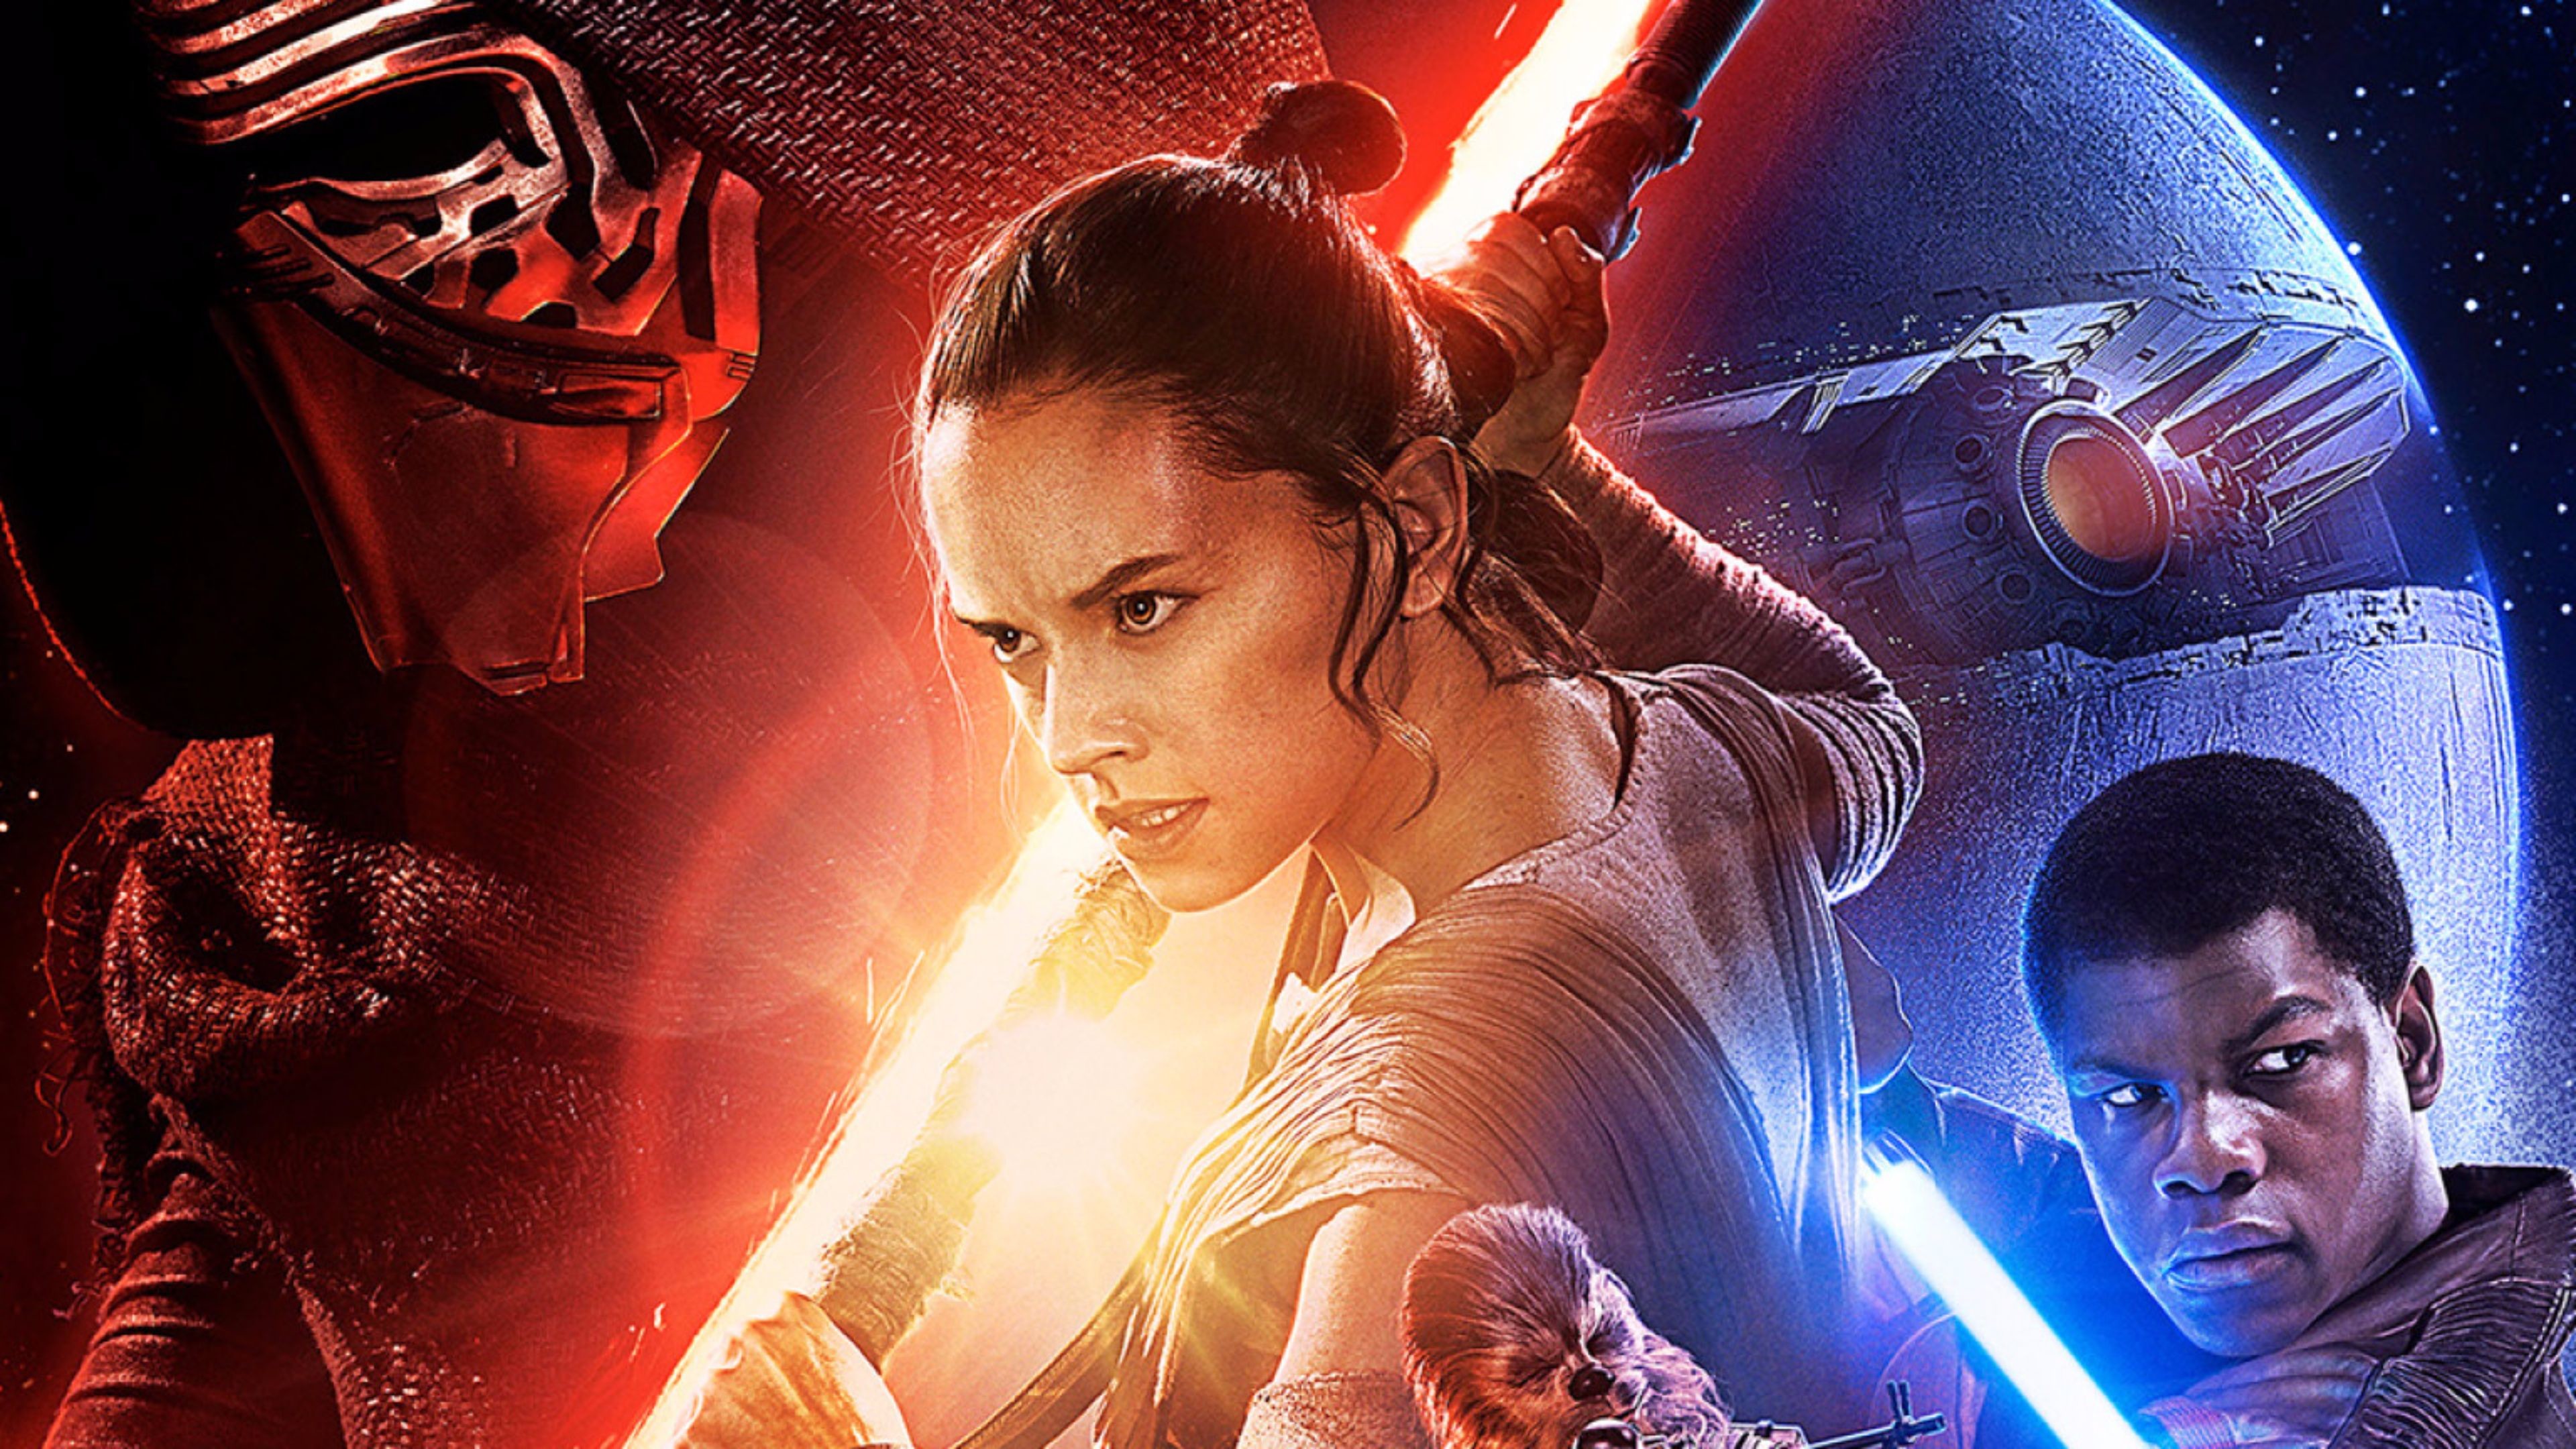 3840x2160 Top Download Star Wars The Force Awakens 4K Wallpaper